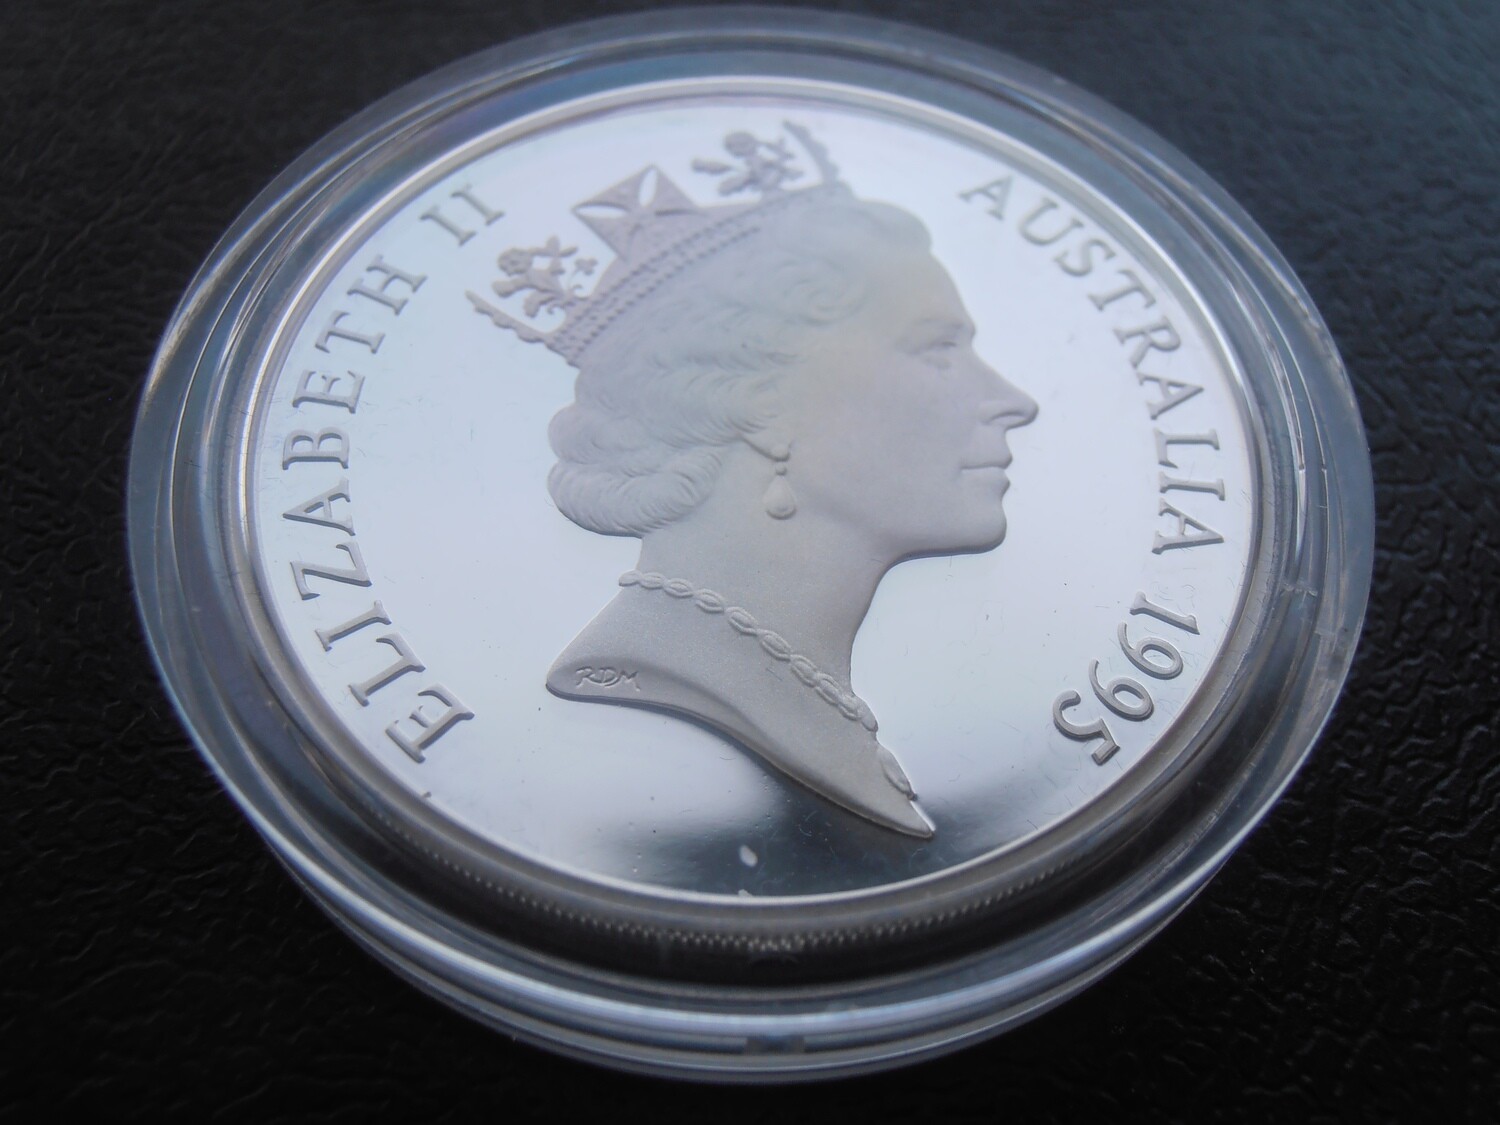 Australia $5 Silver Proof - 1995 (Elizabeth MacArthur)